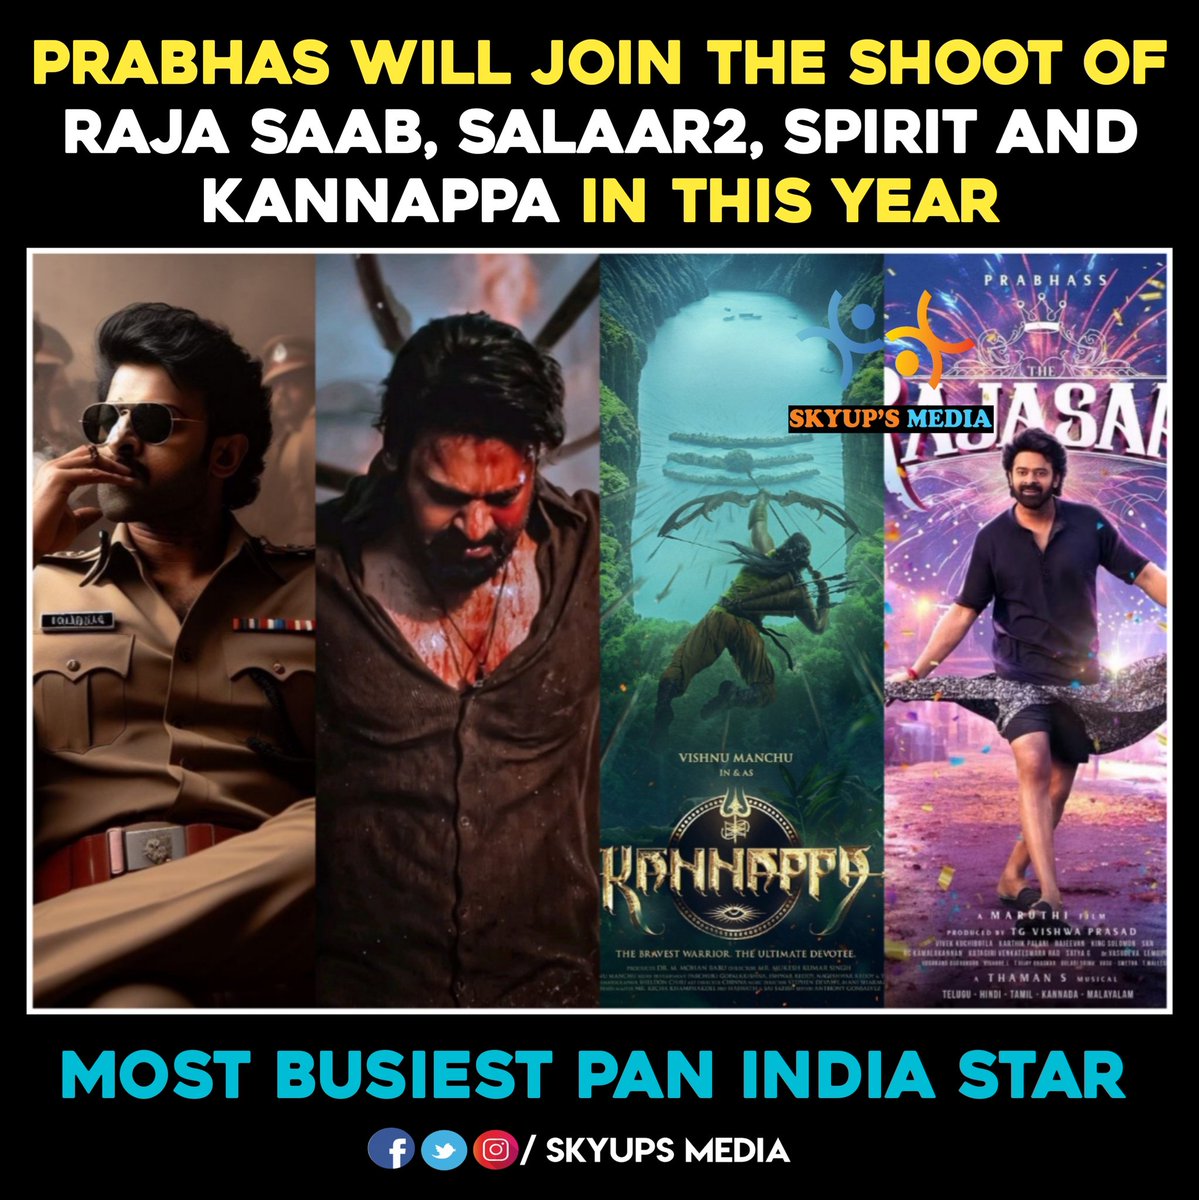 The busiest PAN INDIA SUPER STAR 🔥 #Prabhas